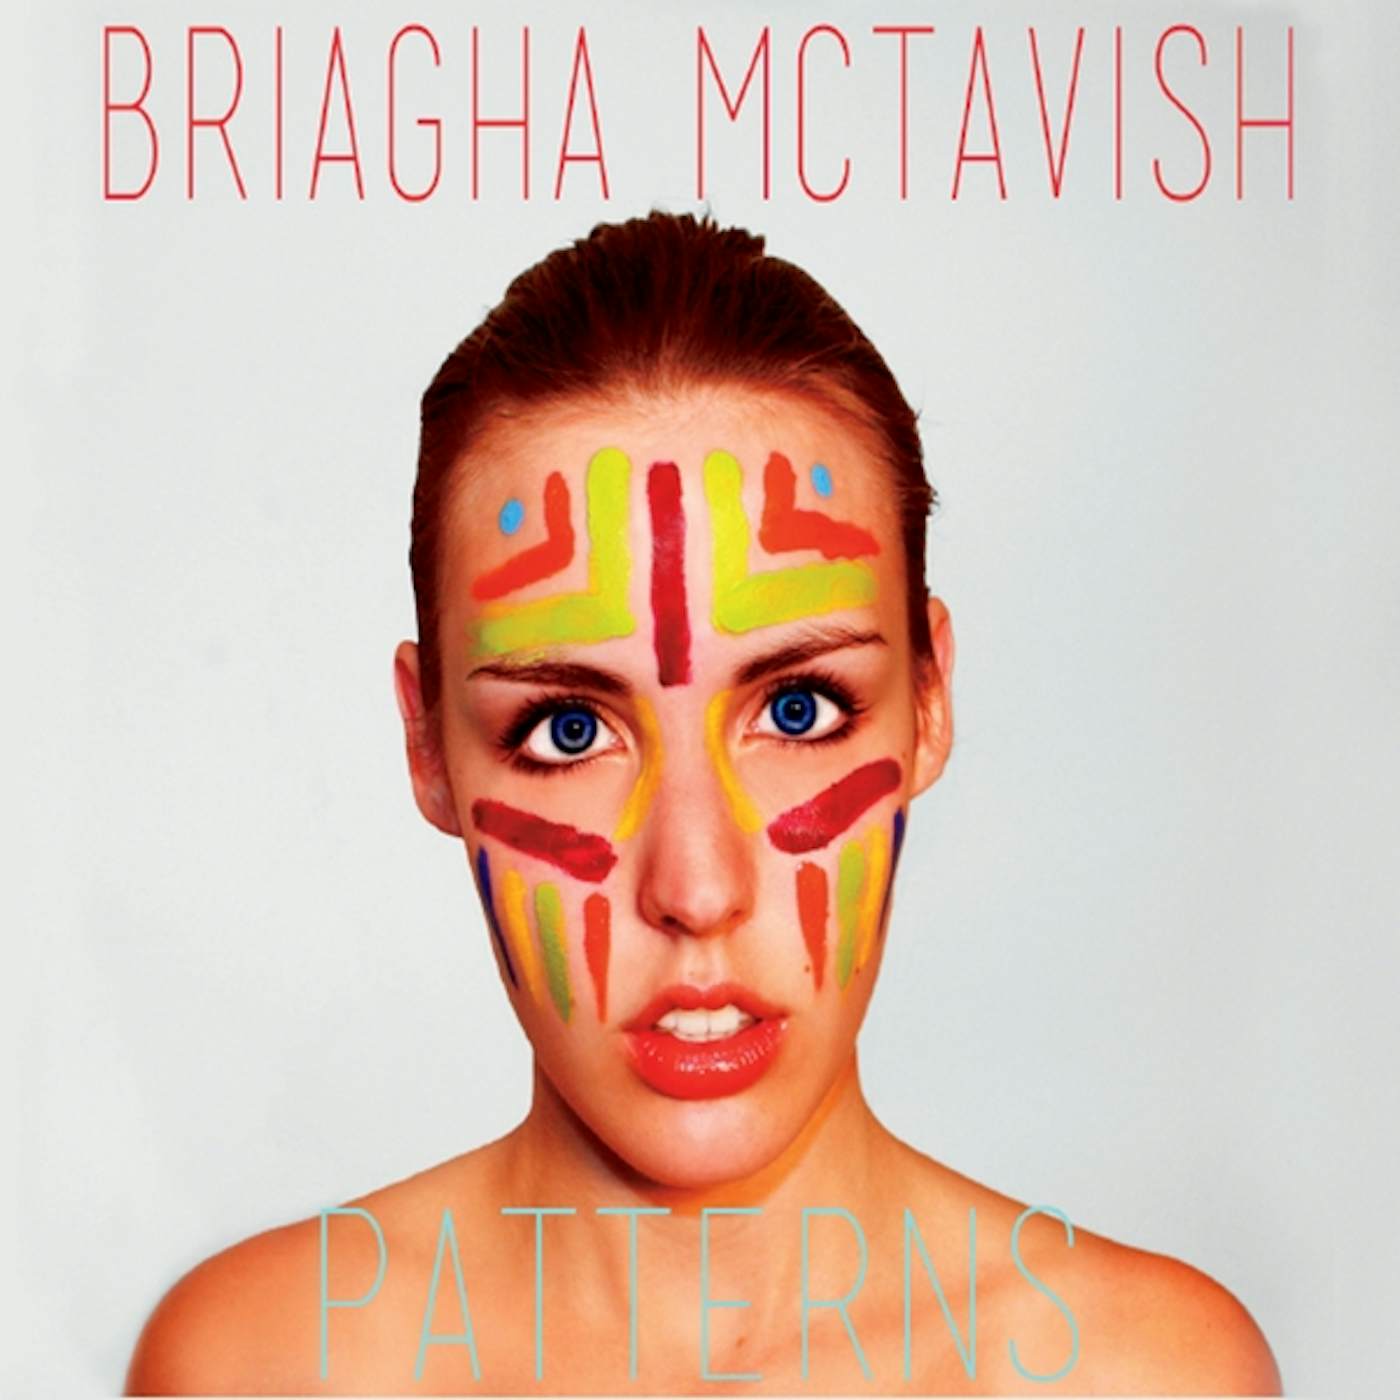 Briagha McTavish PATTERNS EP CD